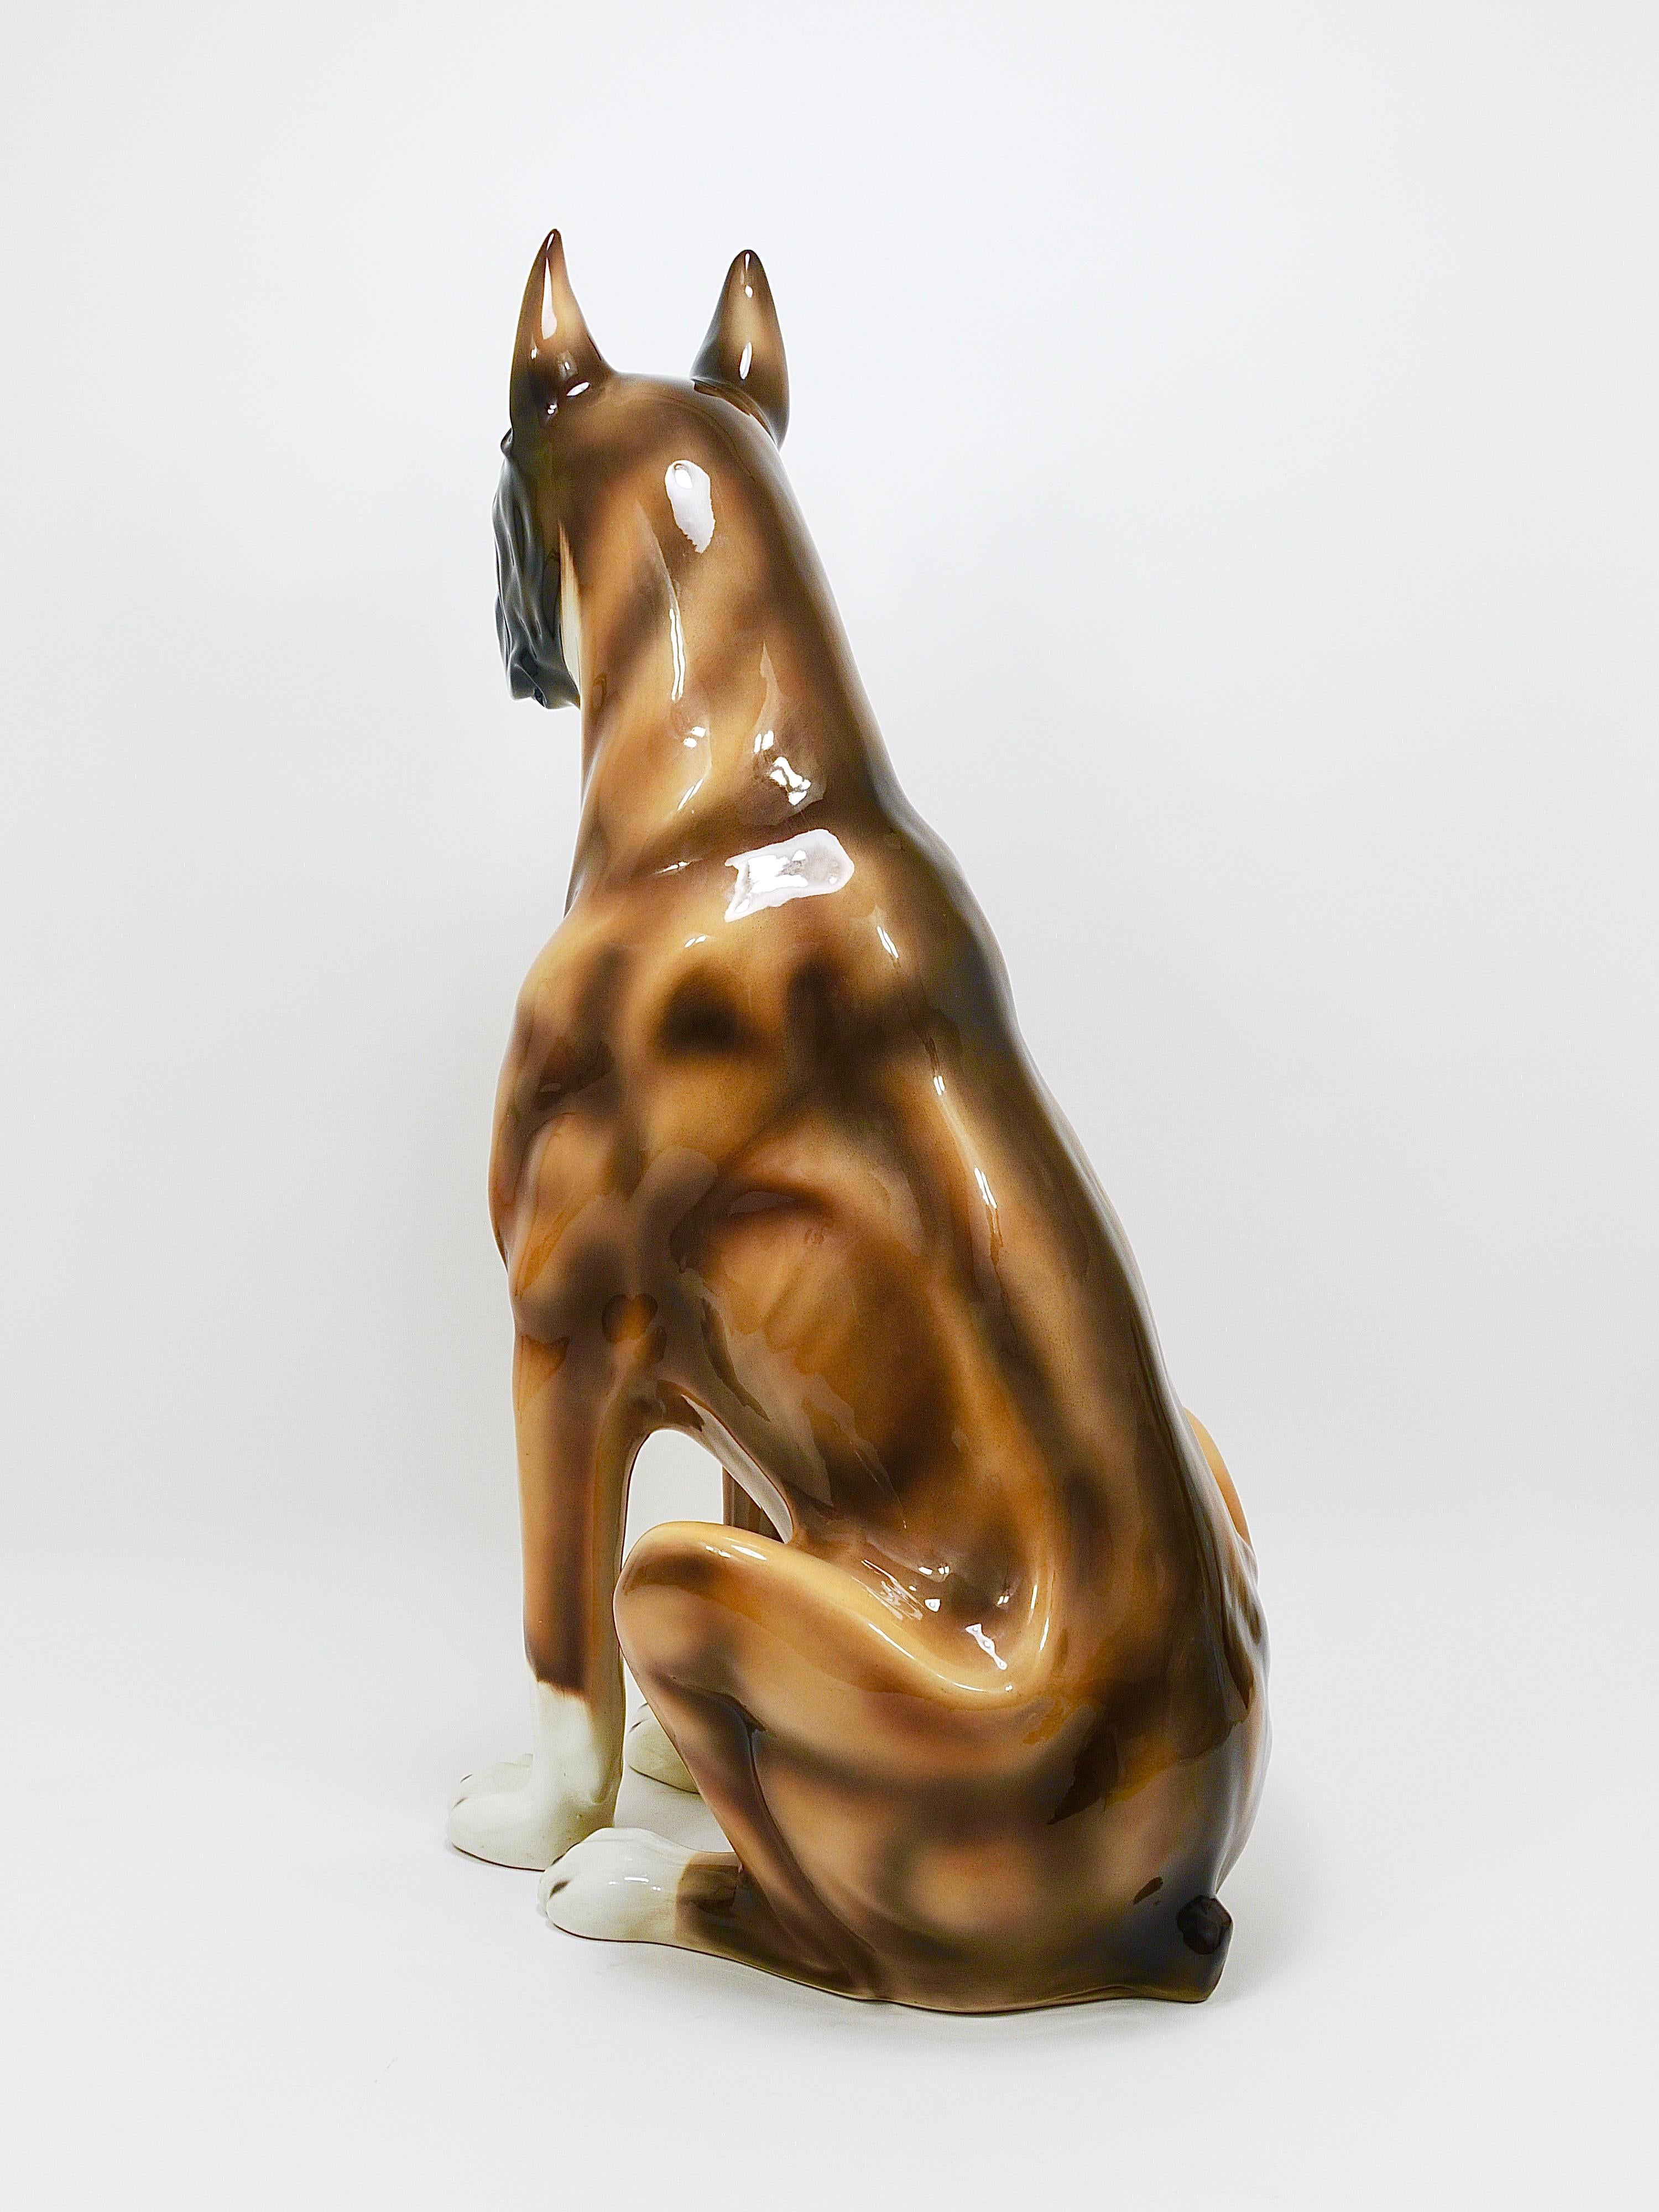 Boxer Dog Life-Size Majolica Statue Sculpture, Glazed Ceramic, Italy, 1970s For Sale 5